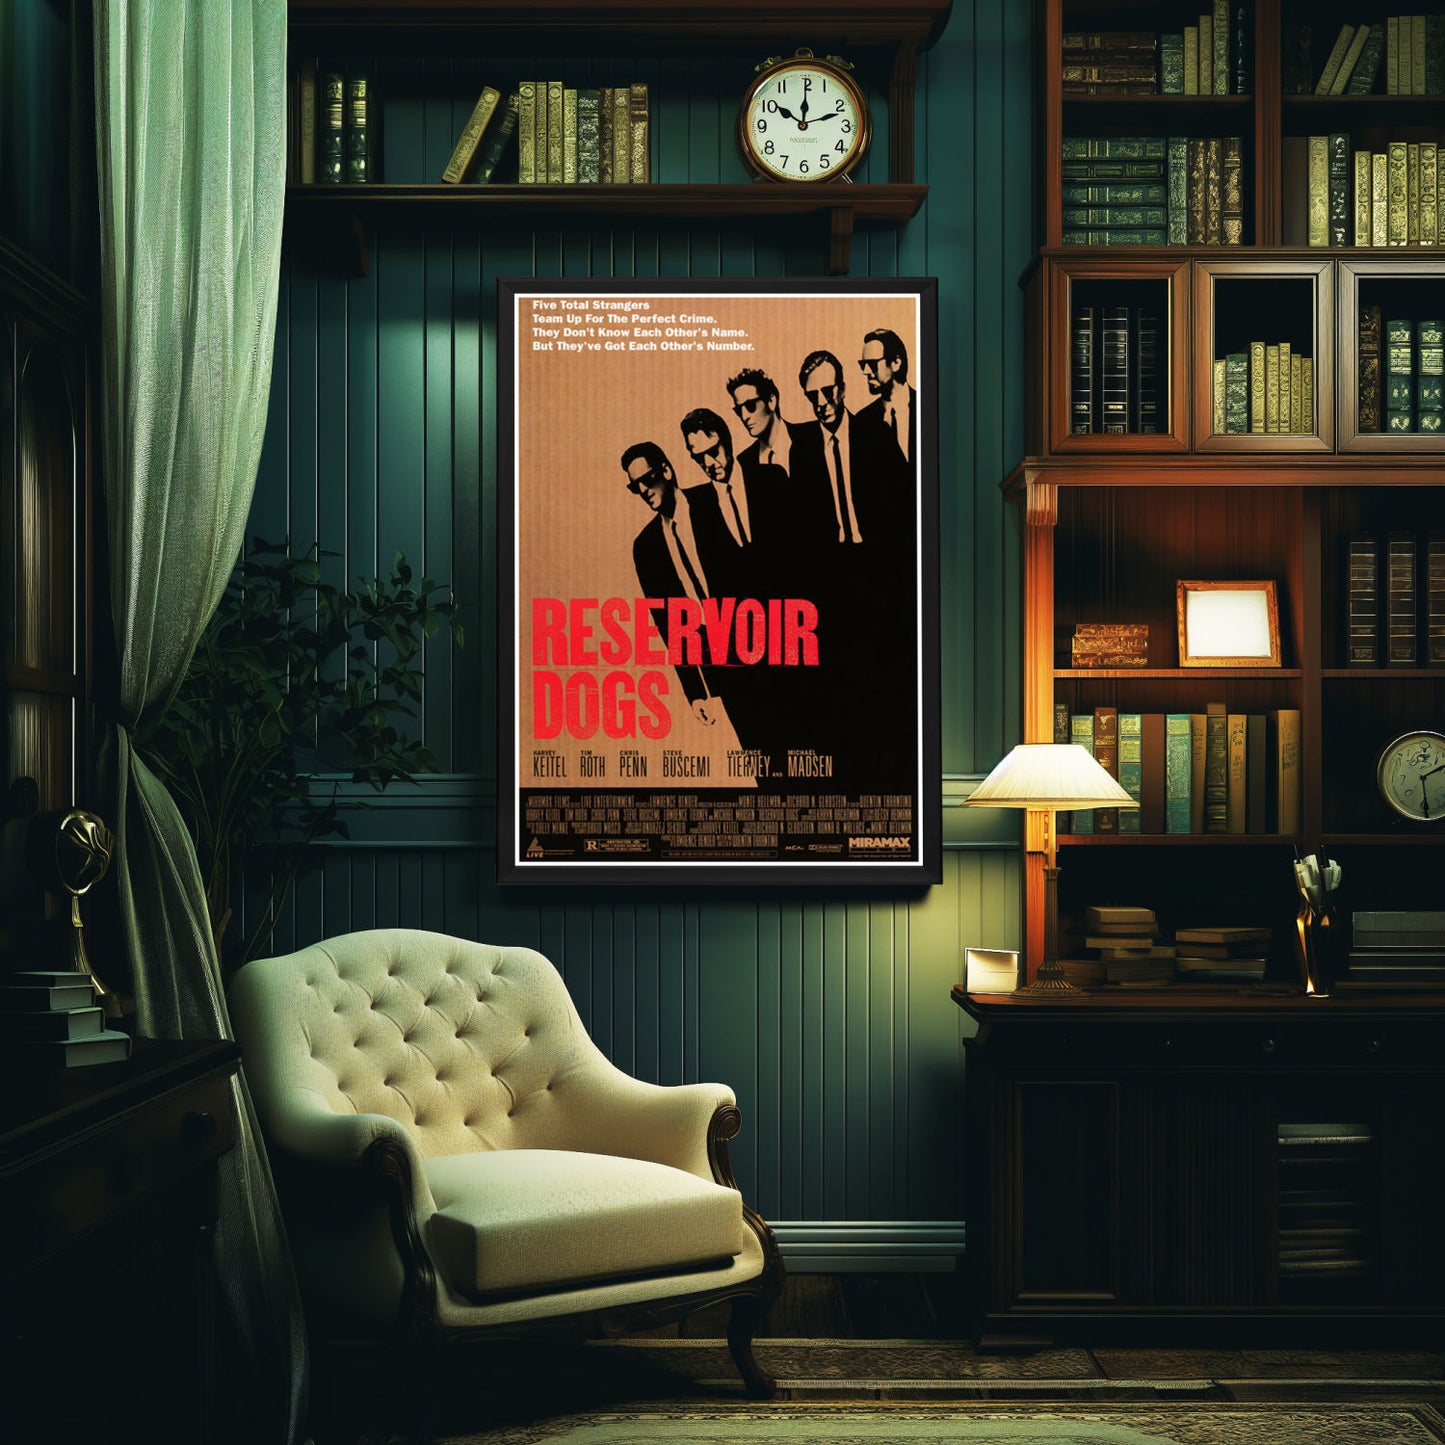 "Reservoir Dogs" (1993) Framed Movie Poster